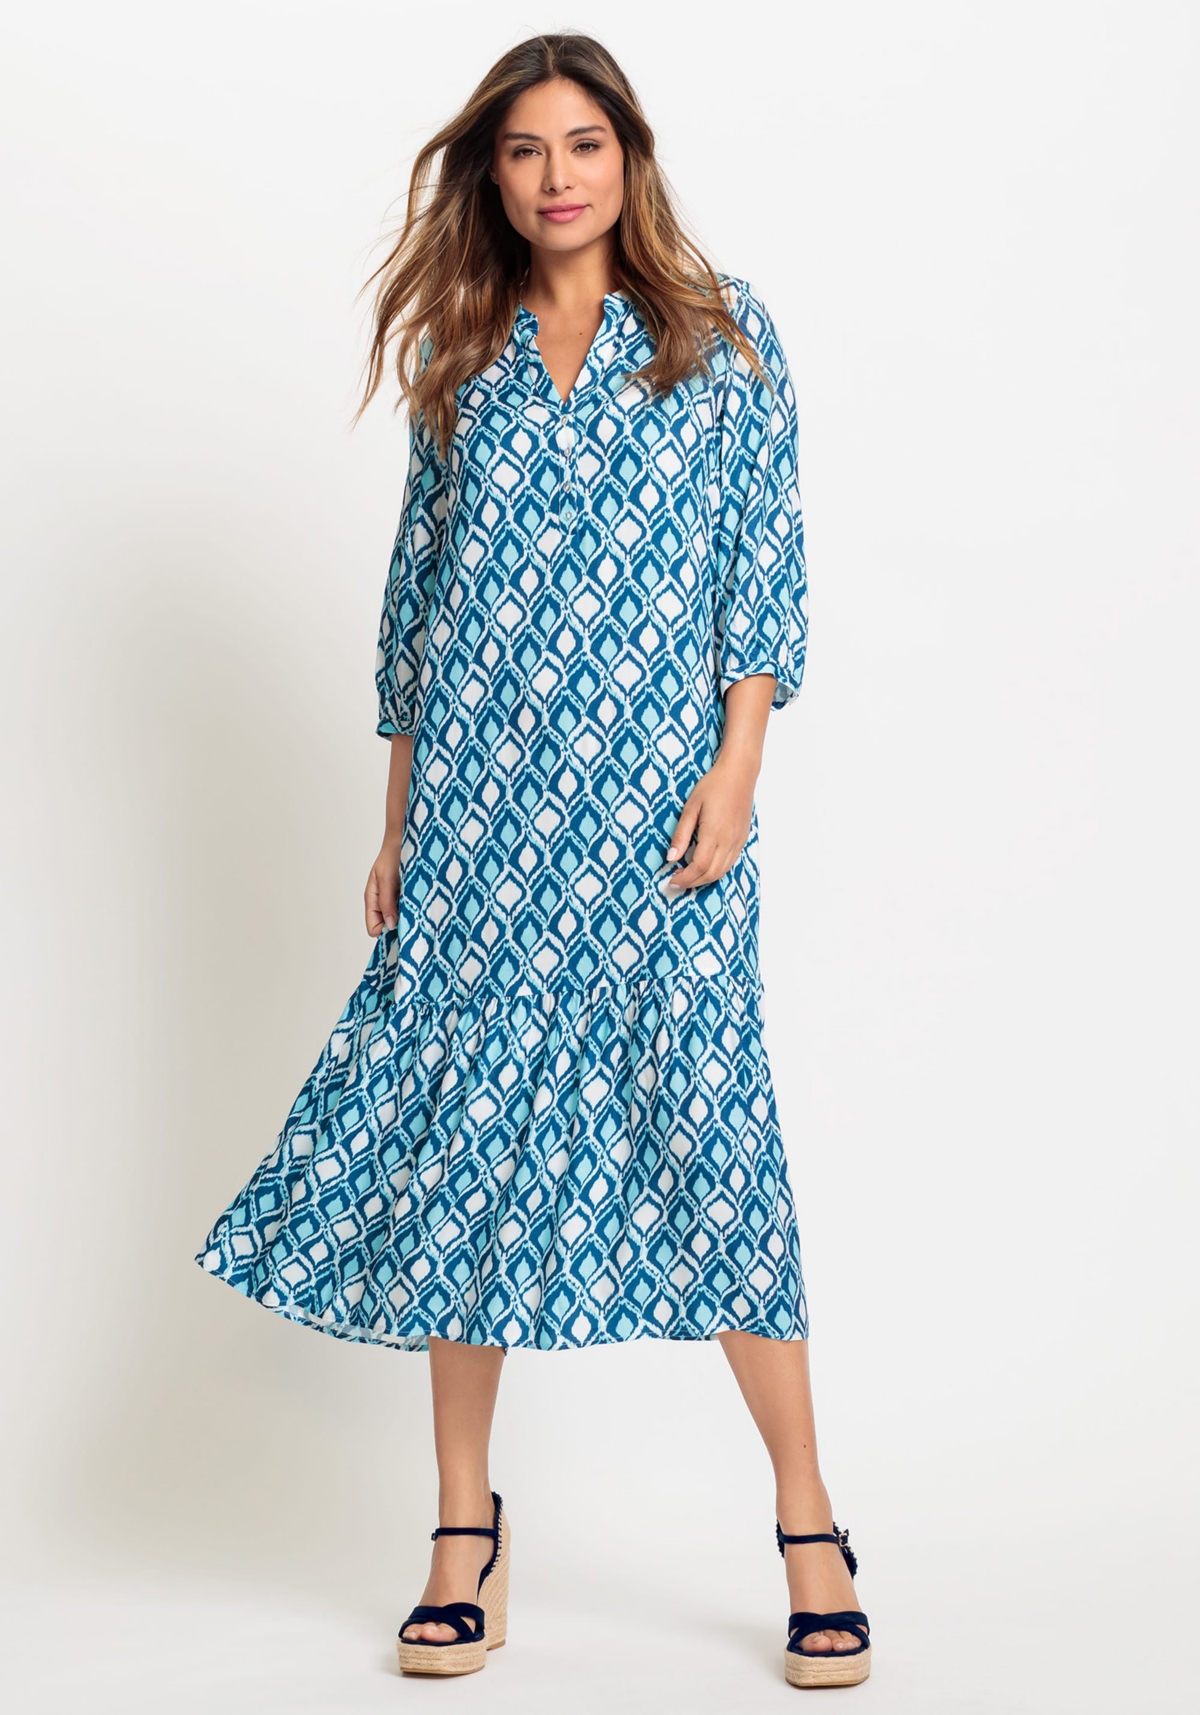 Women's 3/4 Sleeve Ikat Print Maxi Dress - Light turquoise